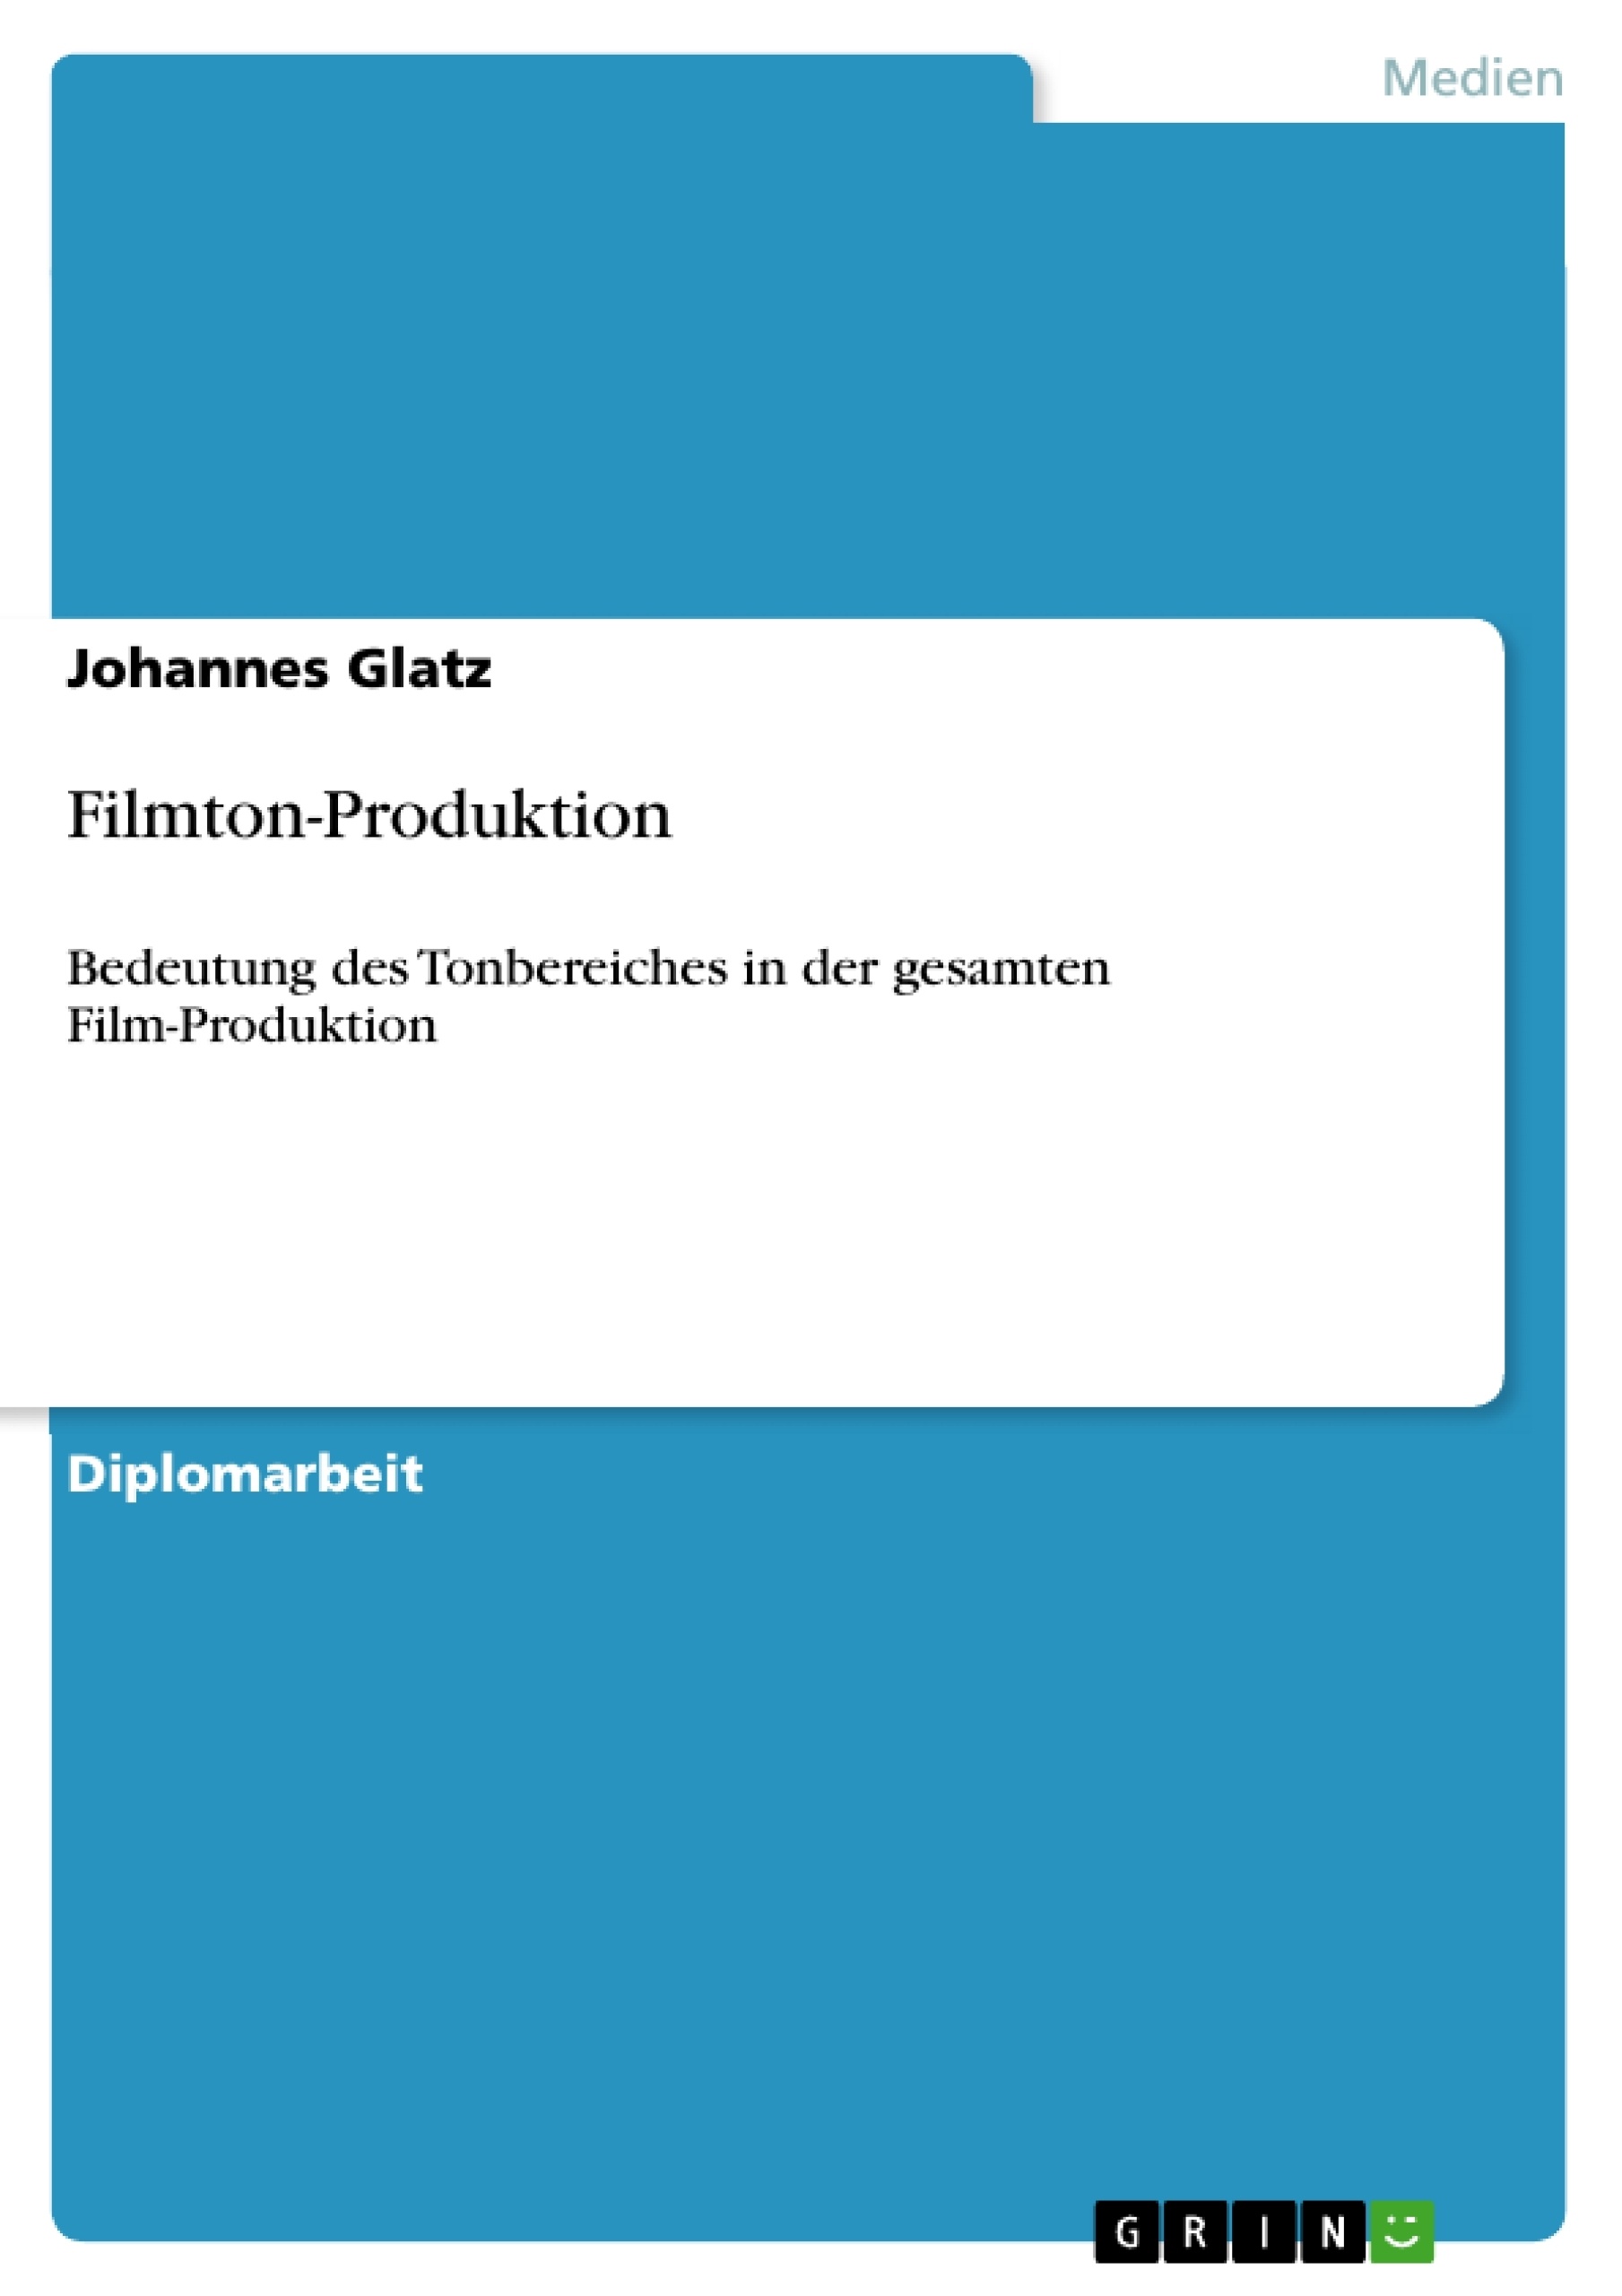 Título: Filmton-Produktion